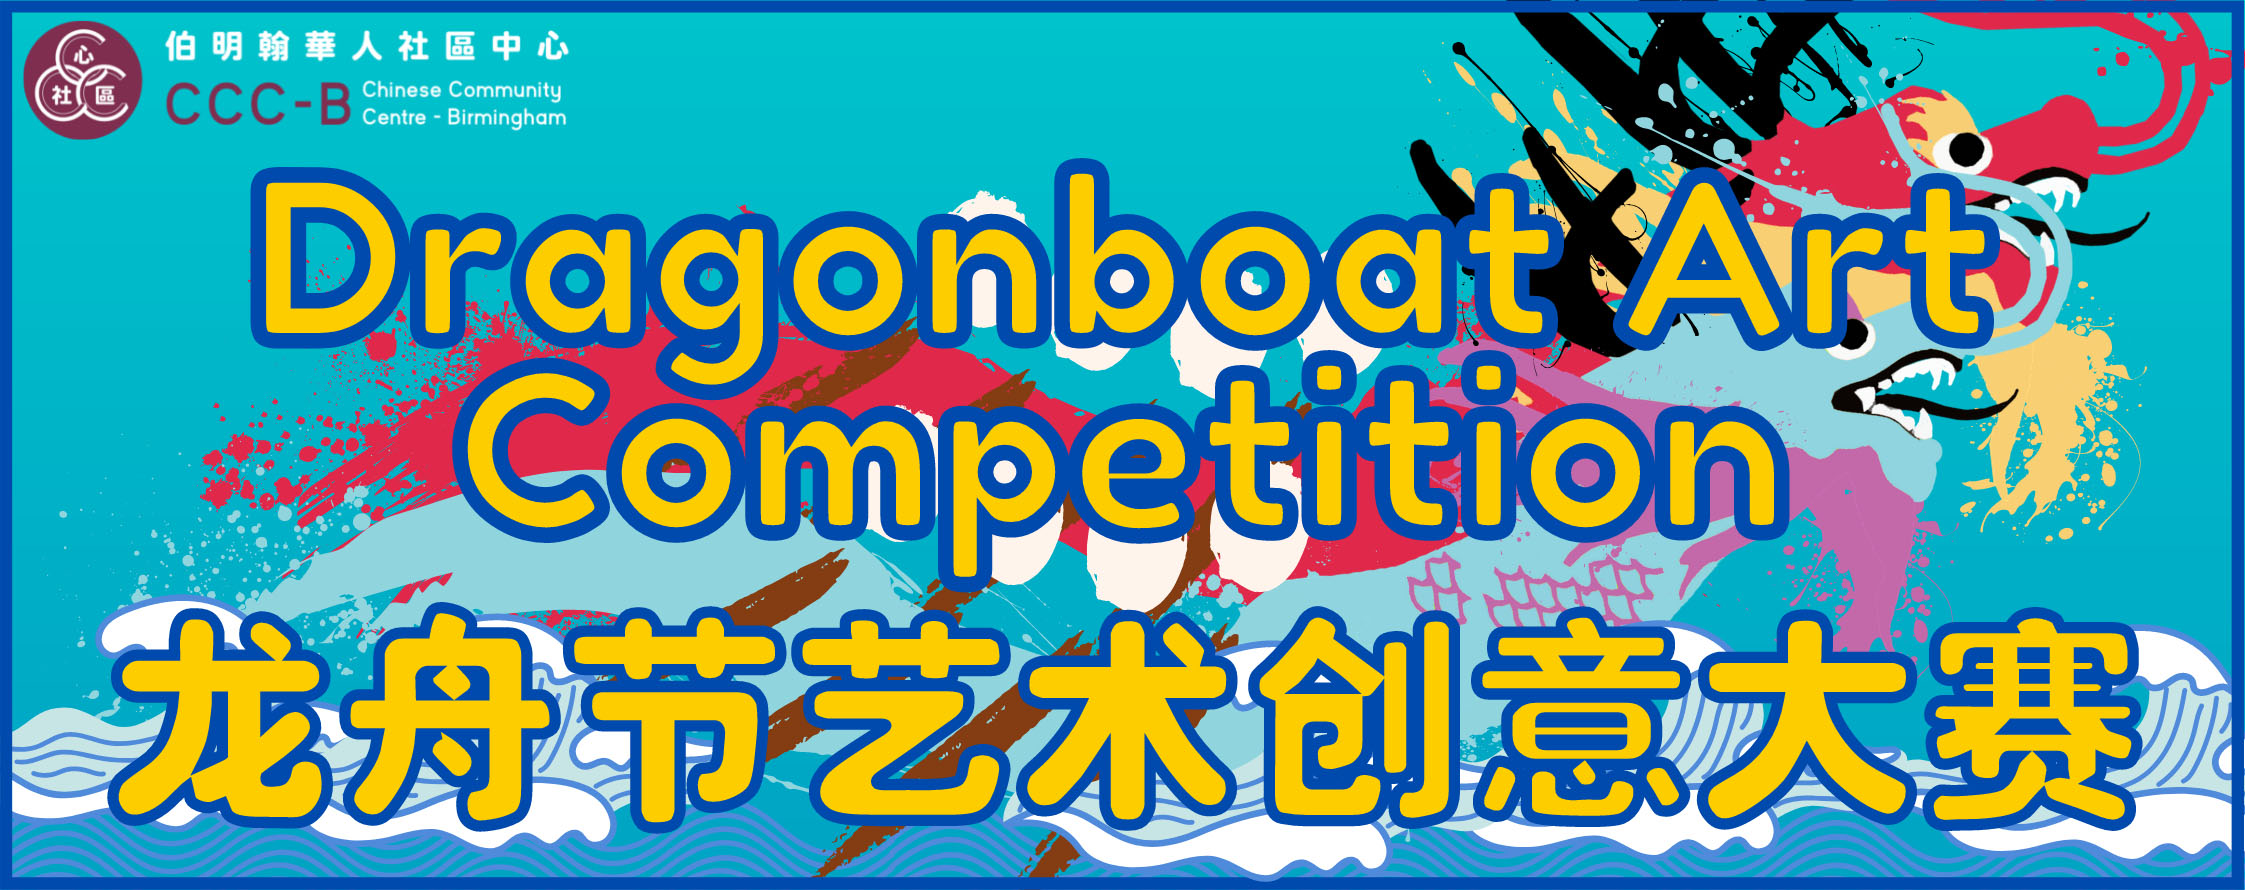 Dragonboat Art Competition – 龙舟节艺术创意大赛